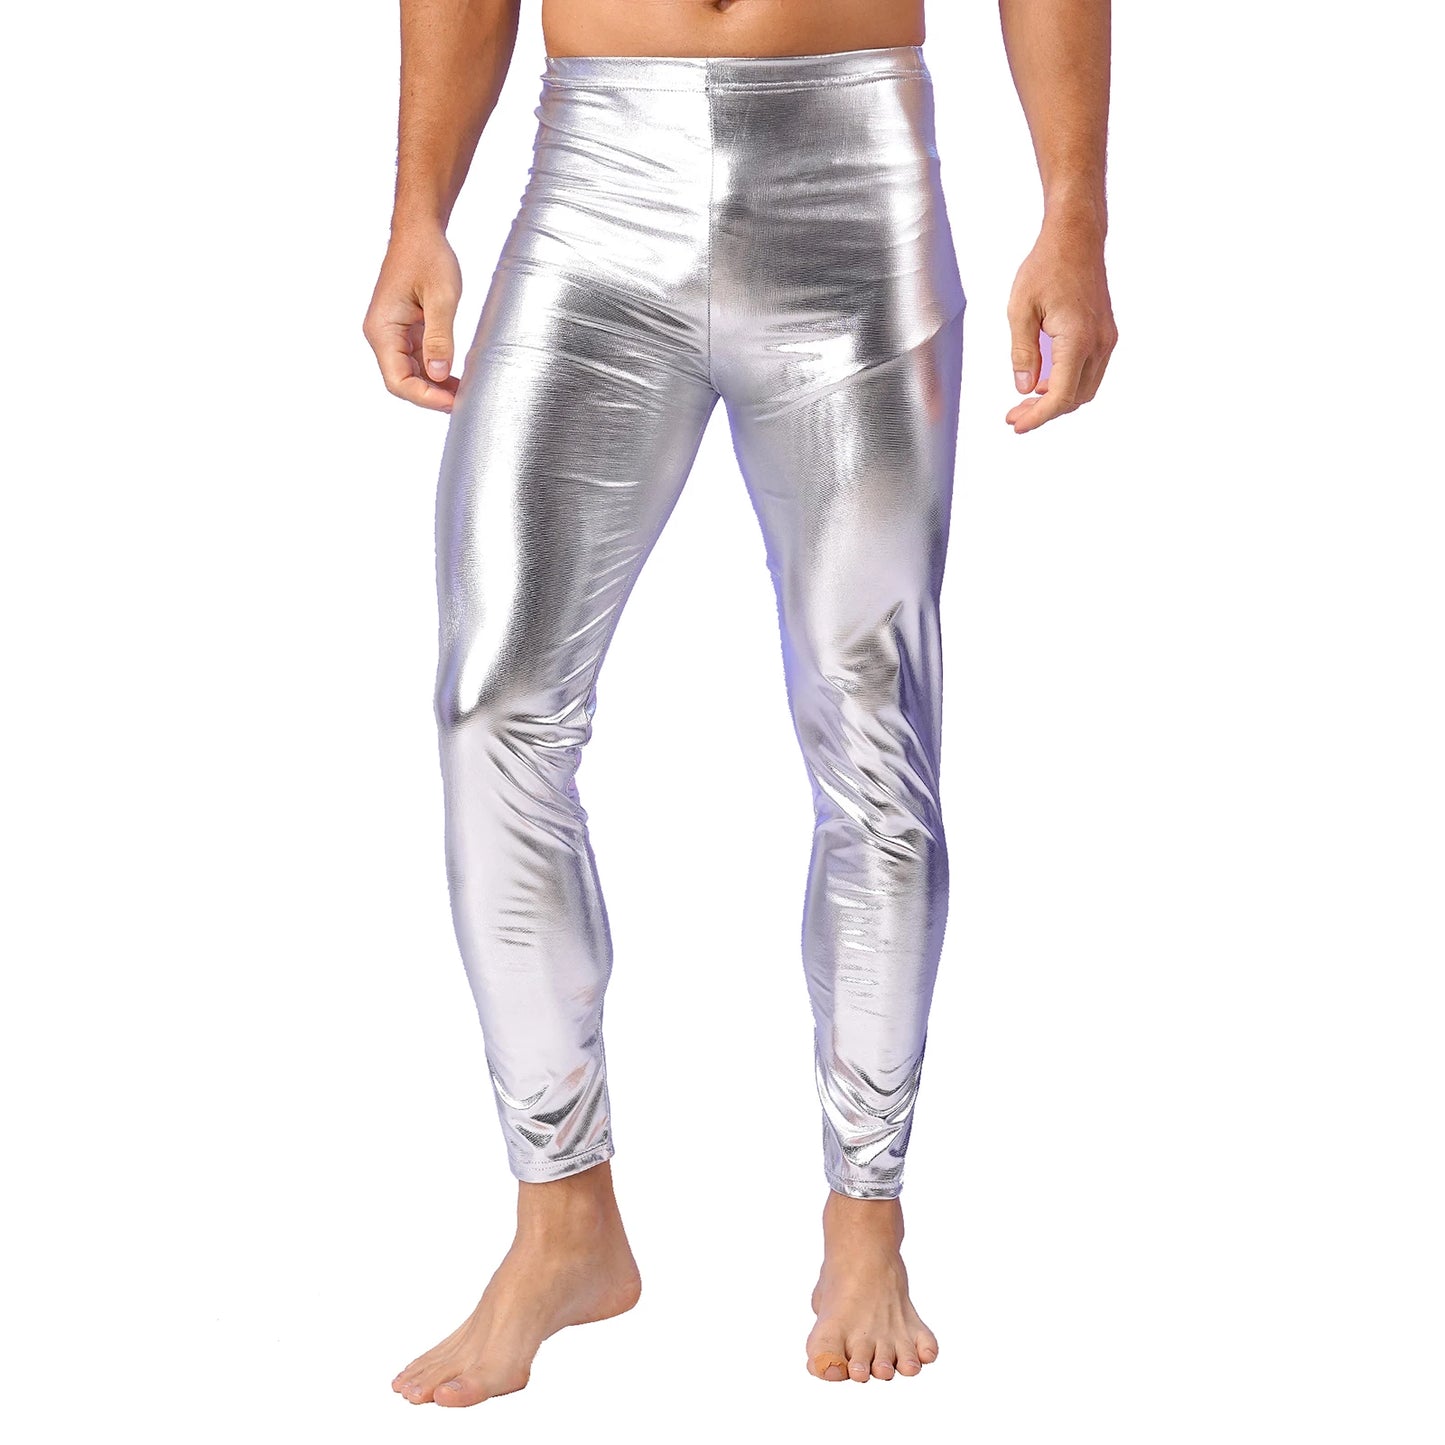 Mens Shiny Jazz Dance Long Pants with Metallic Shiny Dj Disco Skinny Pants Leggings Stage Performance Rave Nightclub Costume